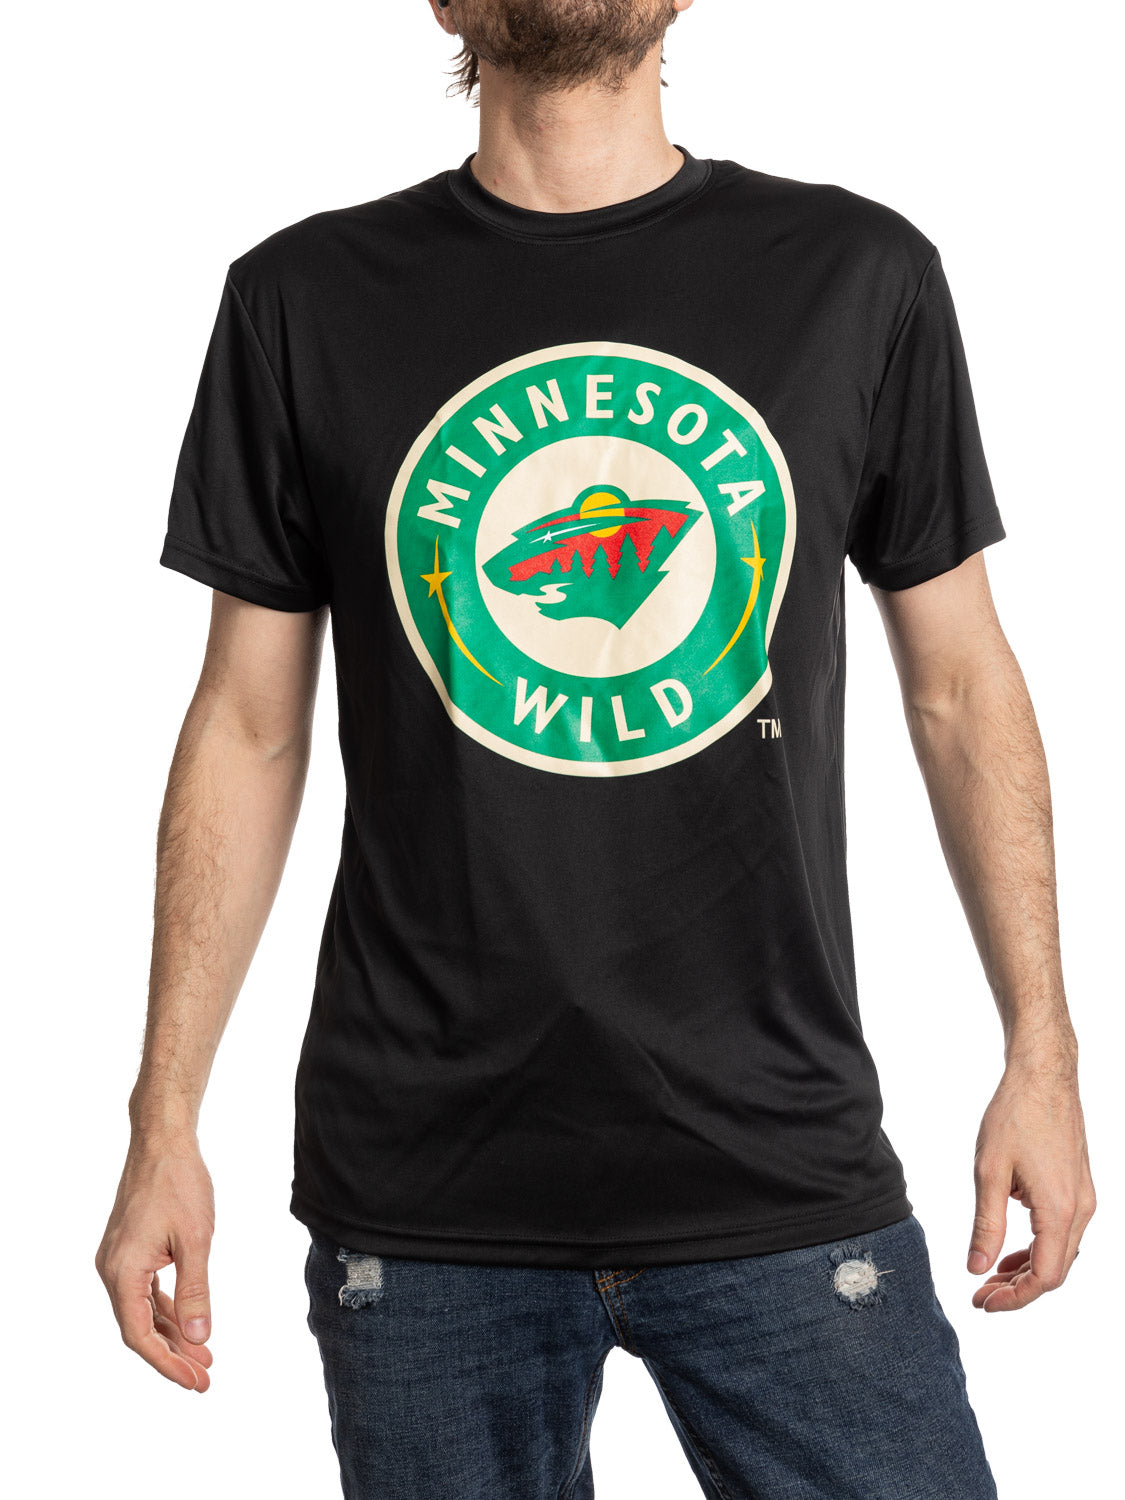 Minnesota Wild Short Sleeve Rashguard T Shirt - Alternate Logo